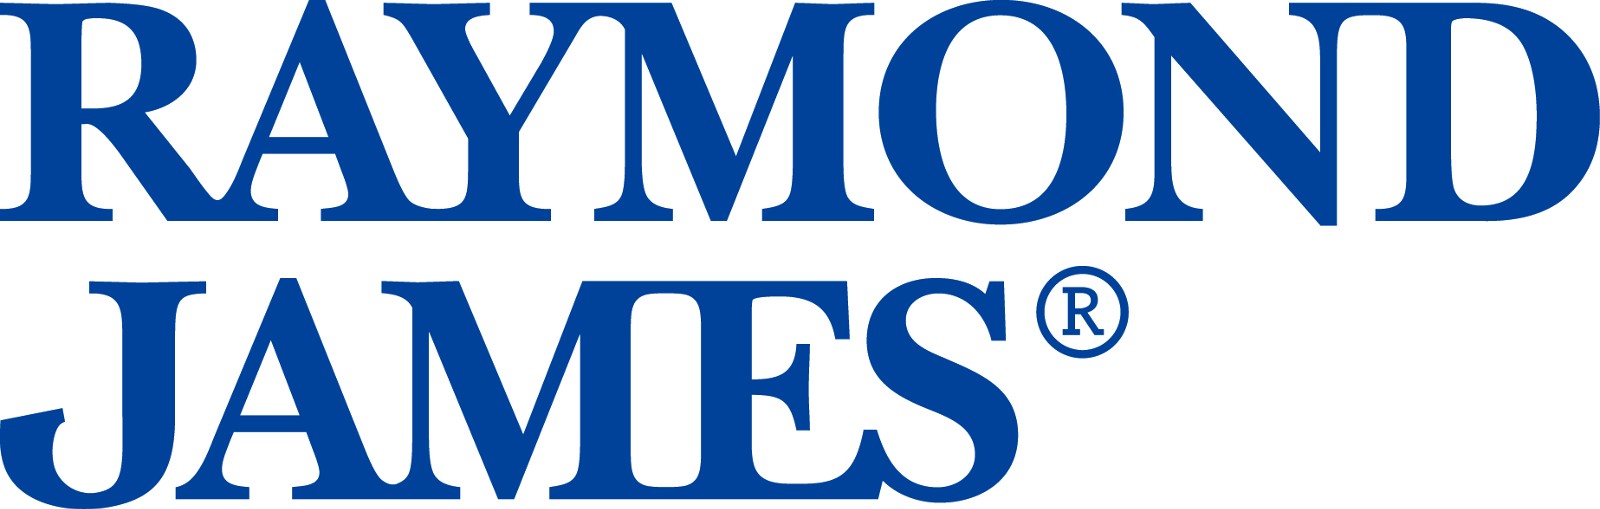 Raymond James logo sponor